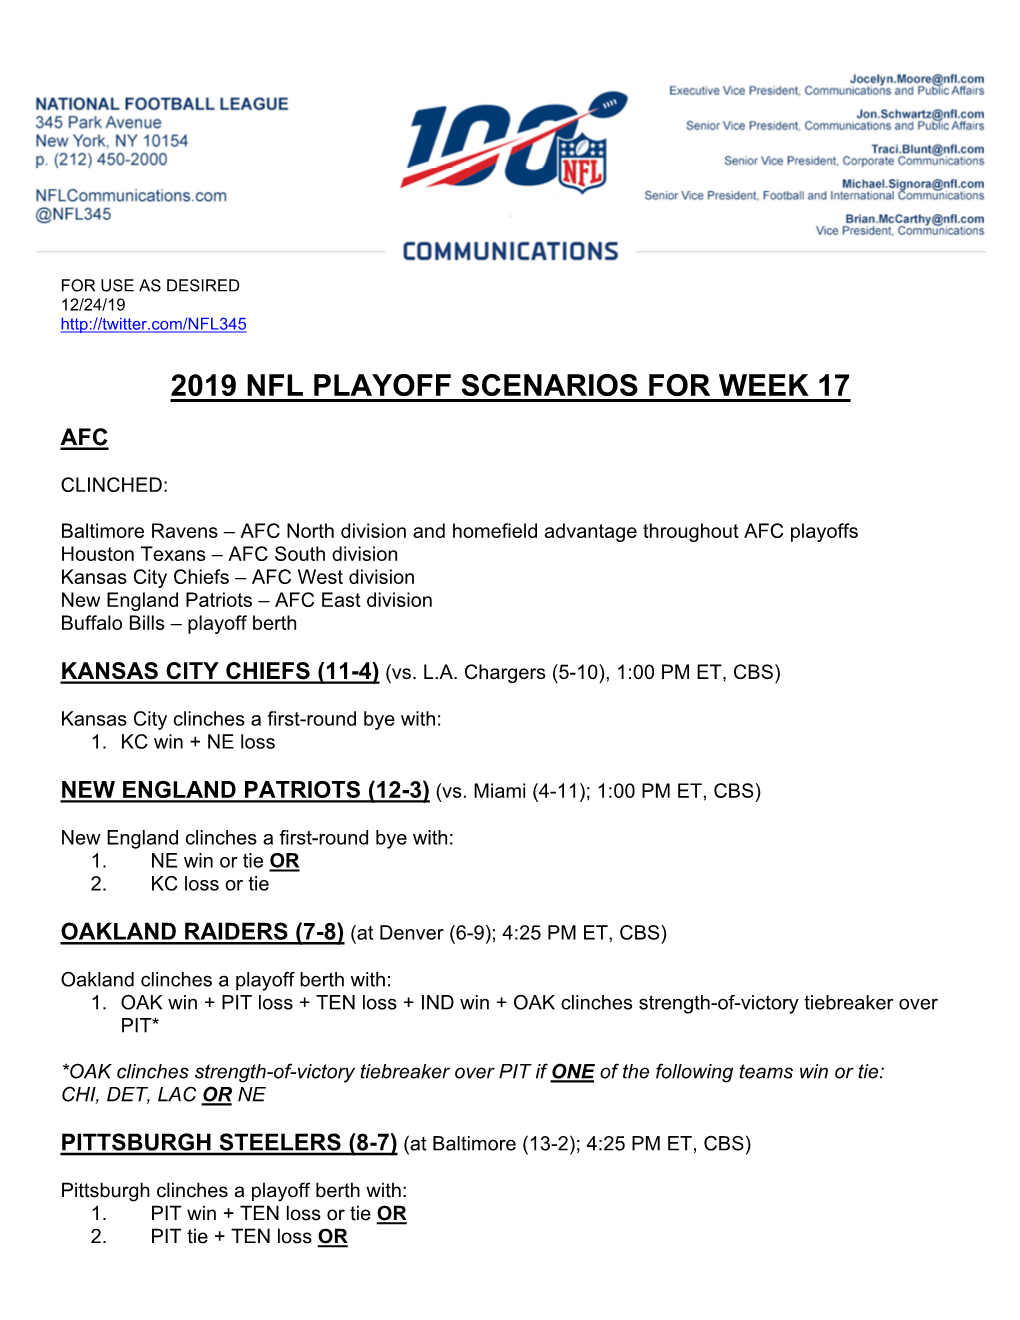 2019 Nfl Playoff Scenarios for Week 17